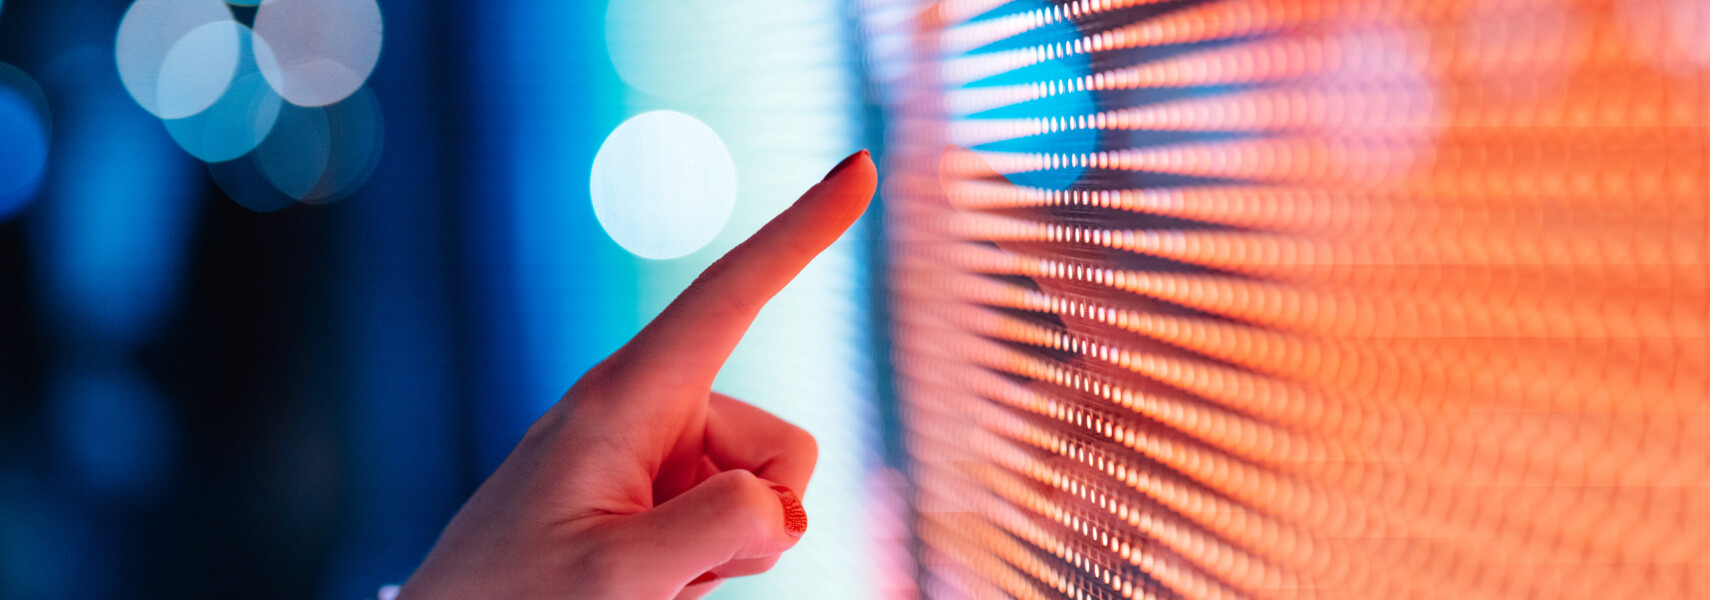 Close Up Of Female Hand Touching Illuminated Digital Display In The Dark.